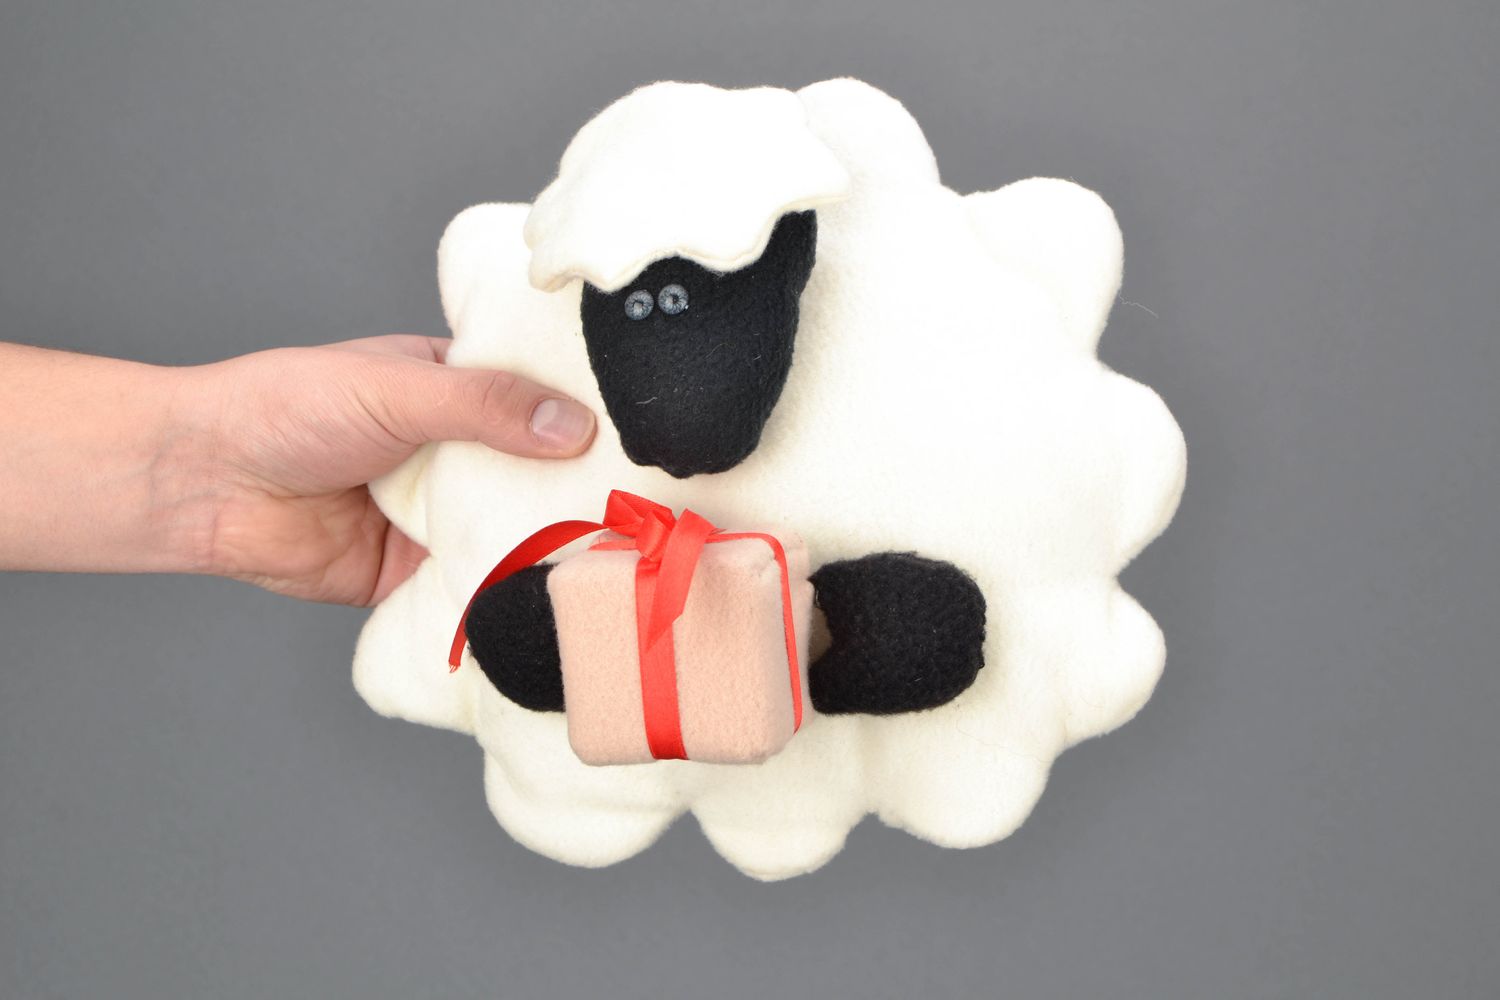 Juguete de fieltro con forma de ovejita foto 1